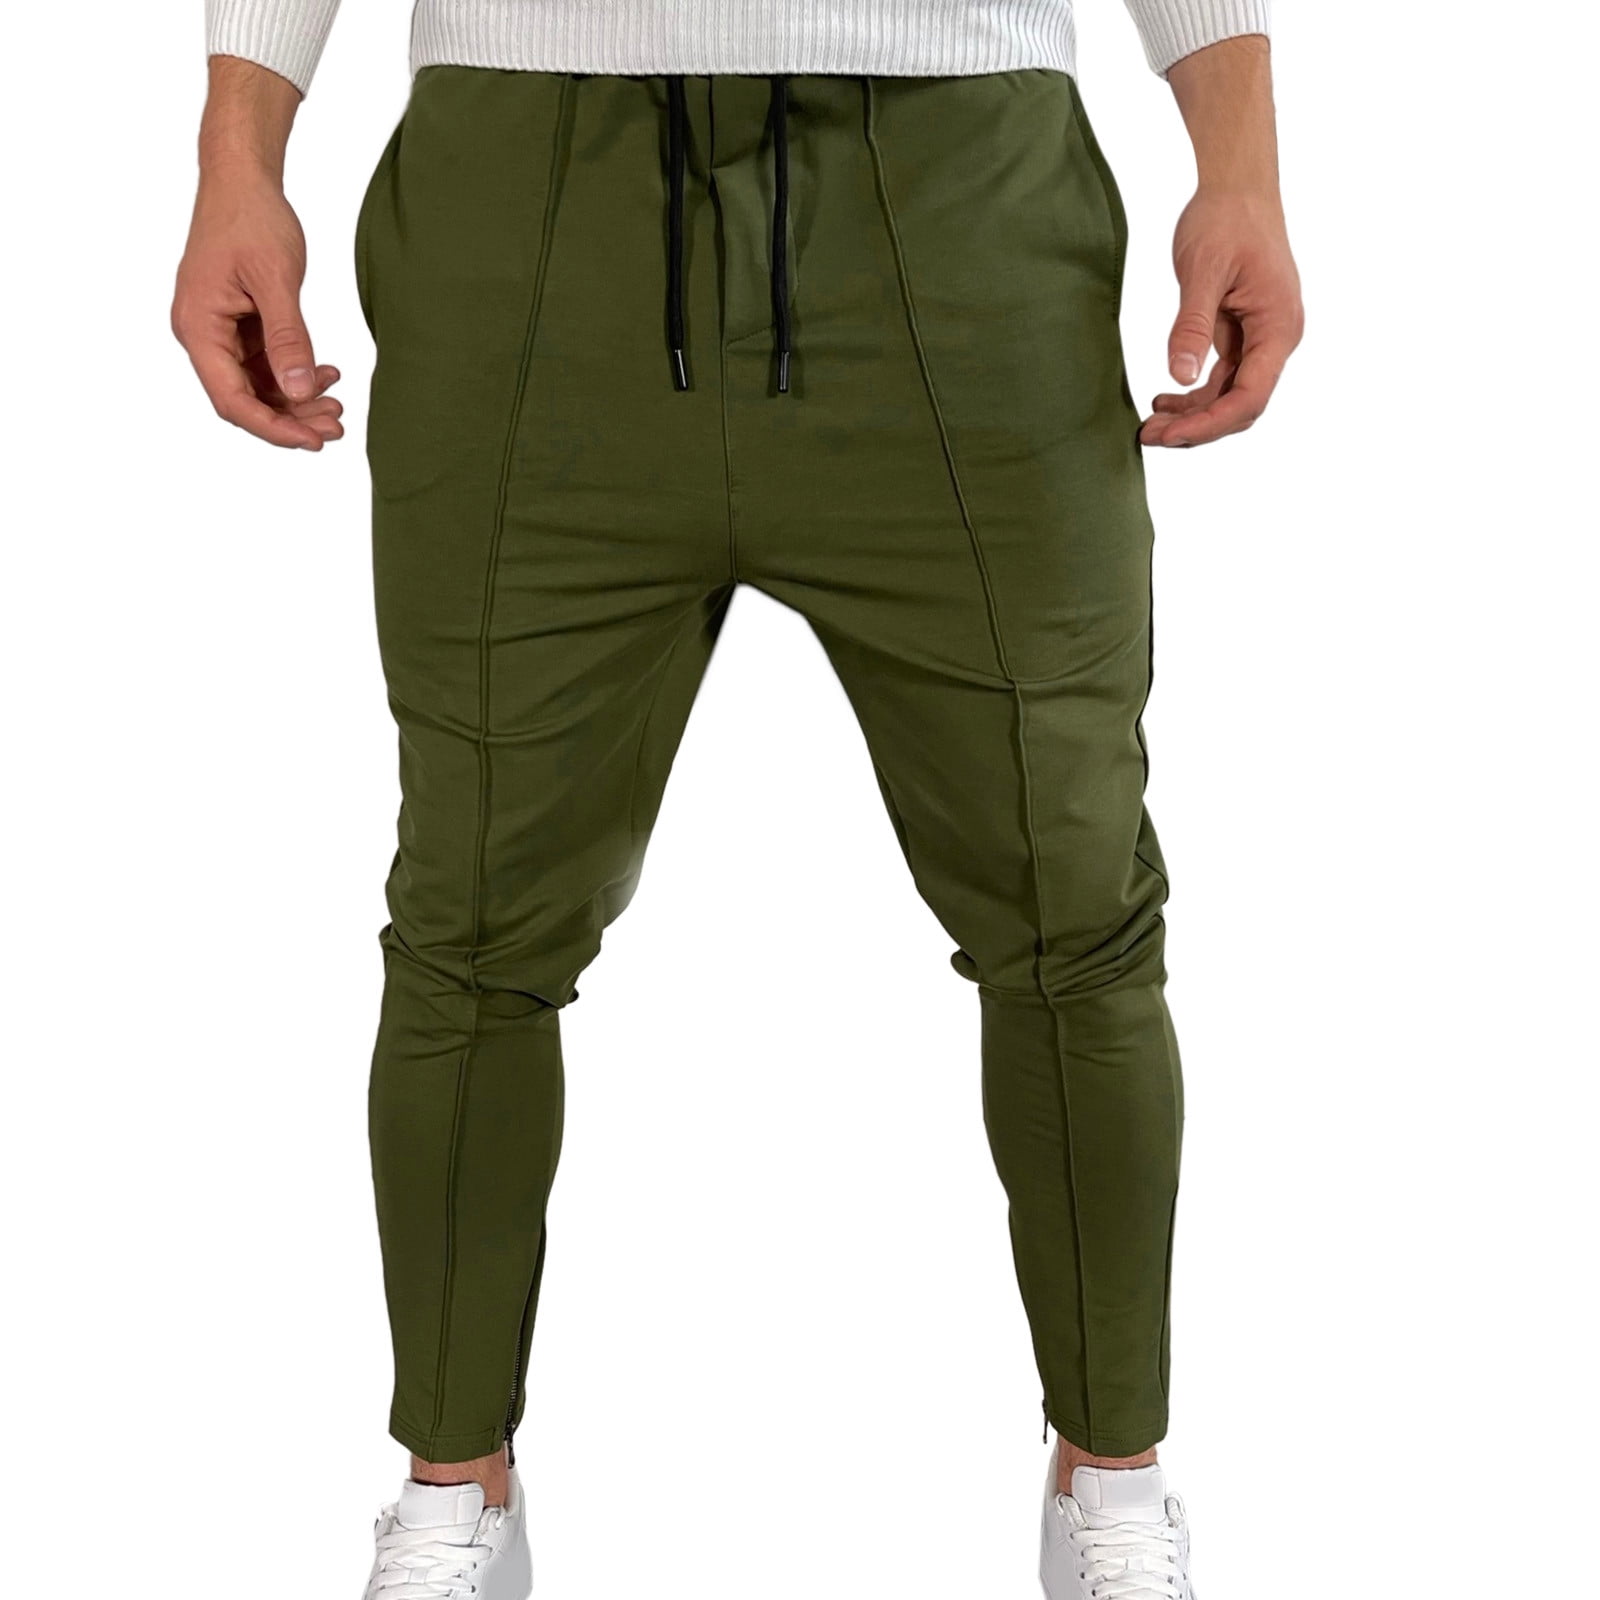 WANYNG pants for men Zipper Casual Thin Sports Breathable No Elasticity  Trousers Pockets Pants cargo pants Green 3XL - Walmart.com